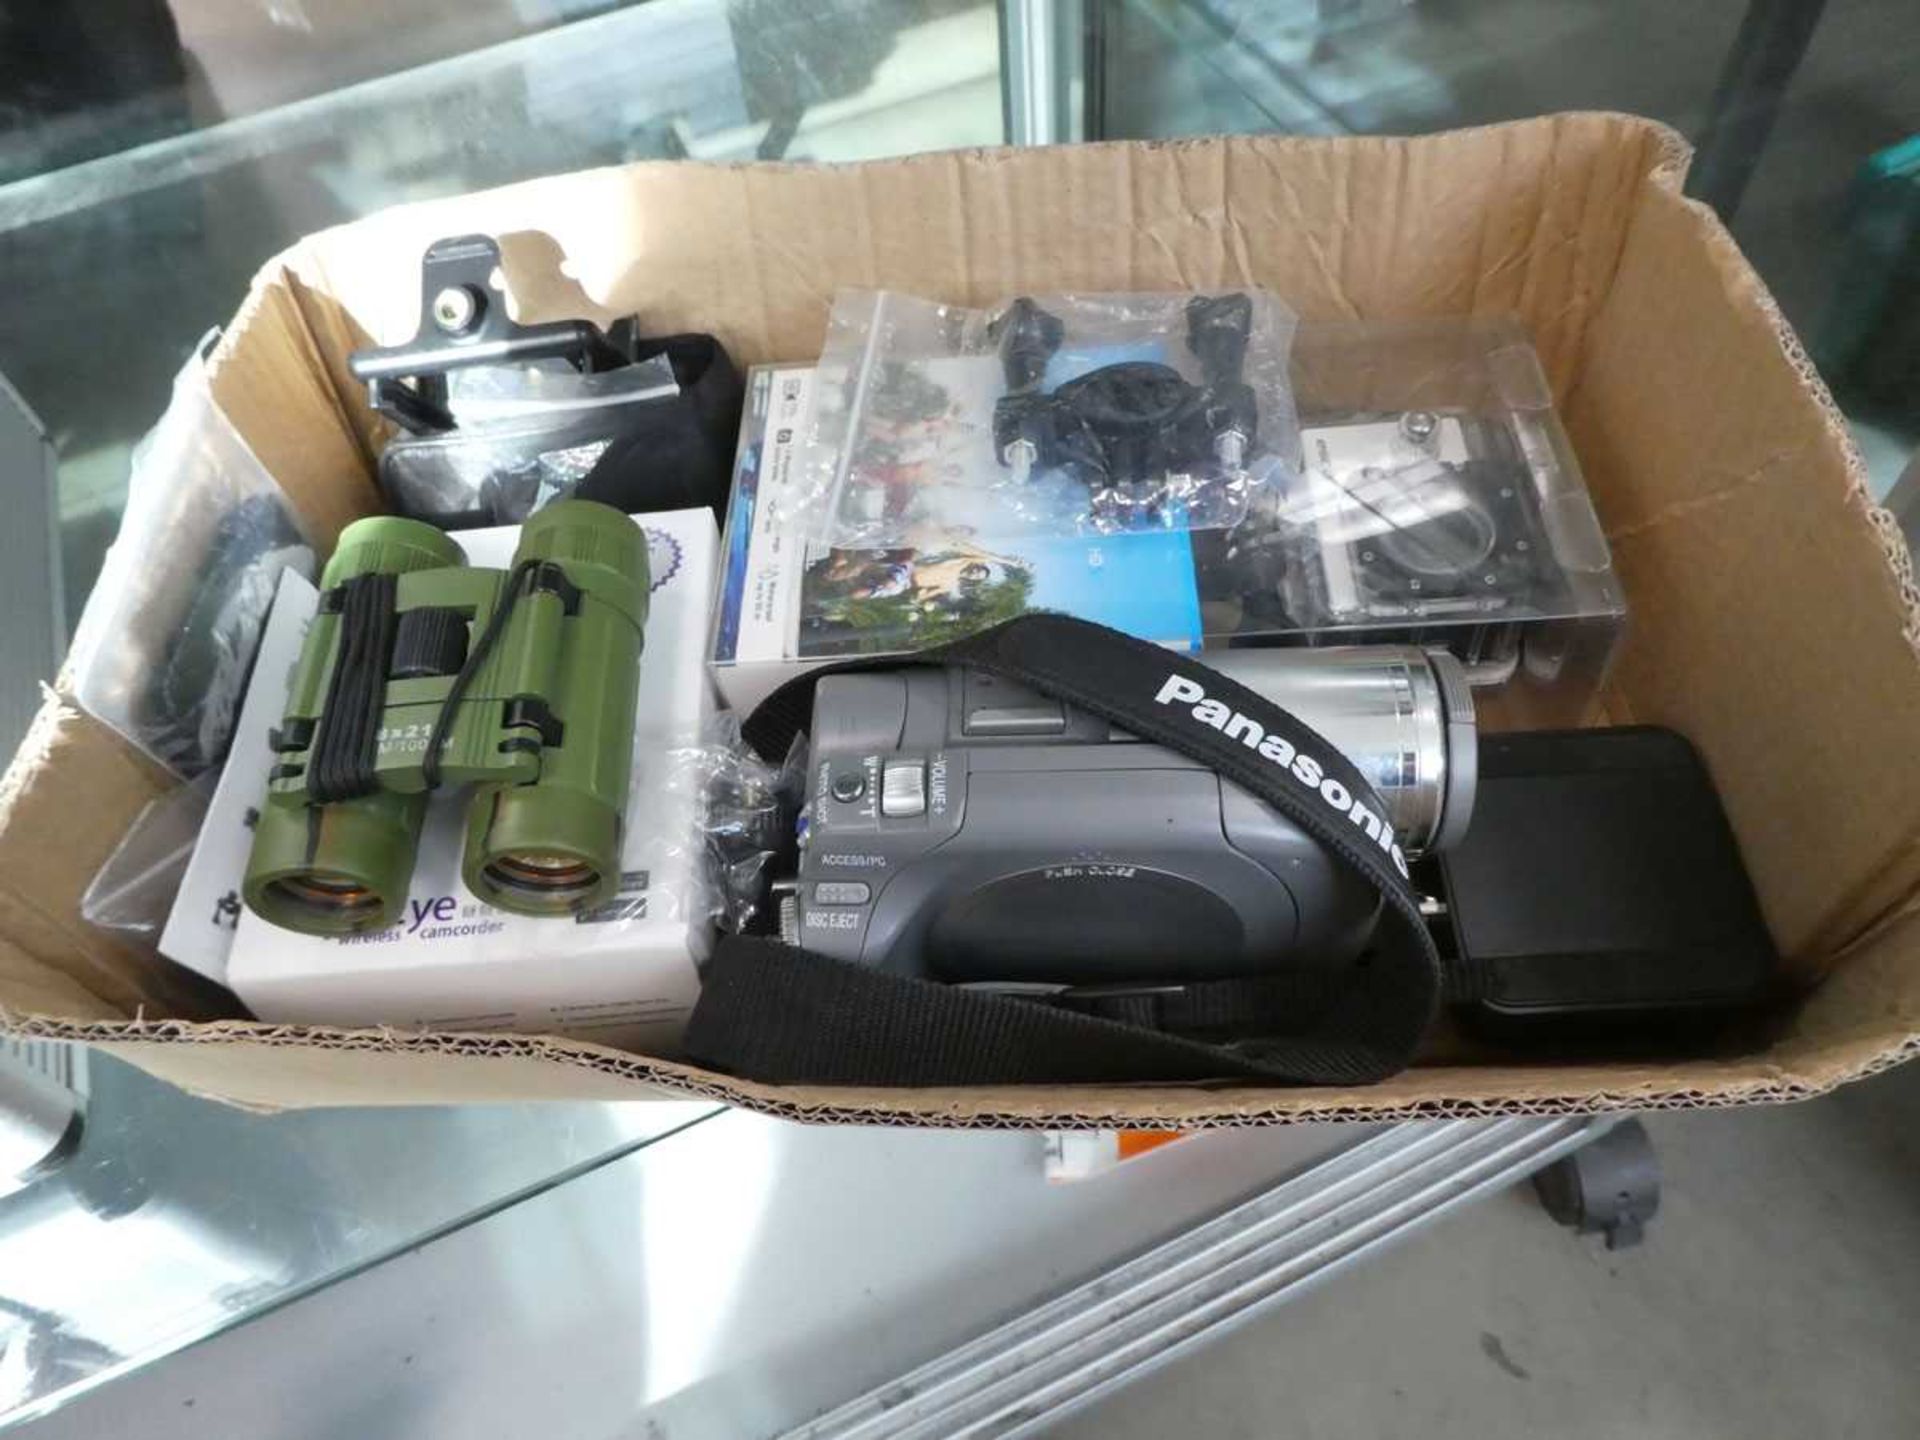 Tray containing Panasonic camcorder, binoculars etc